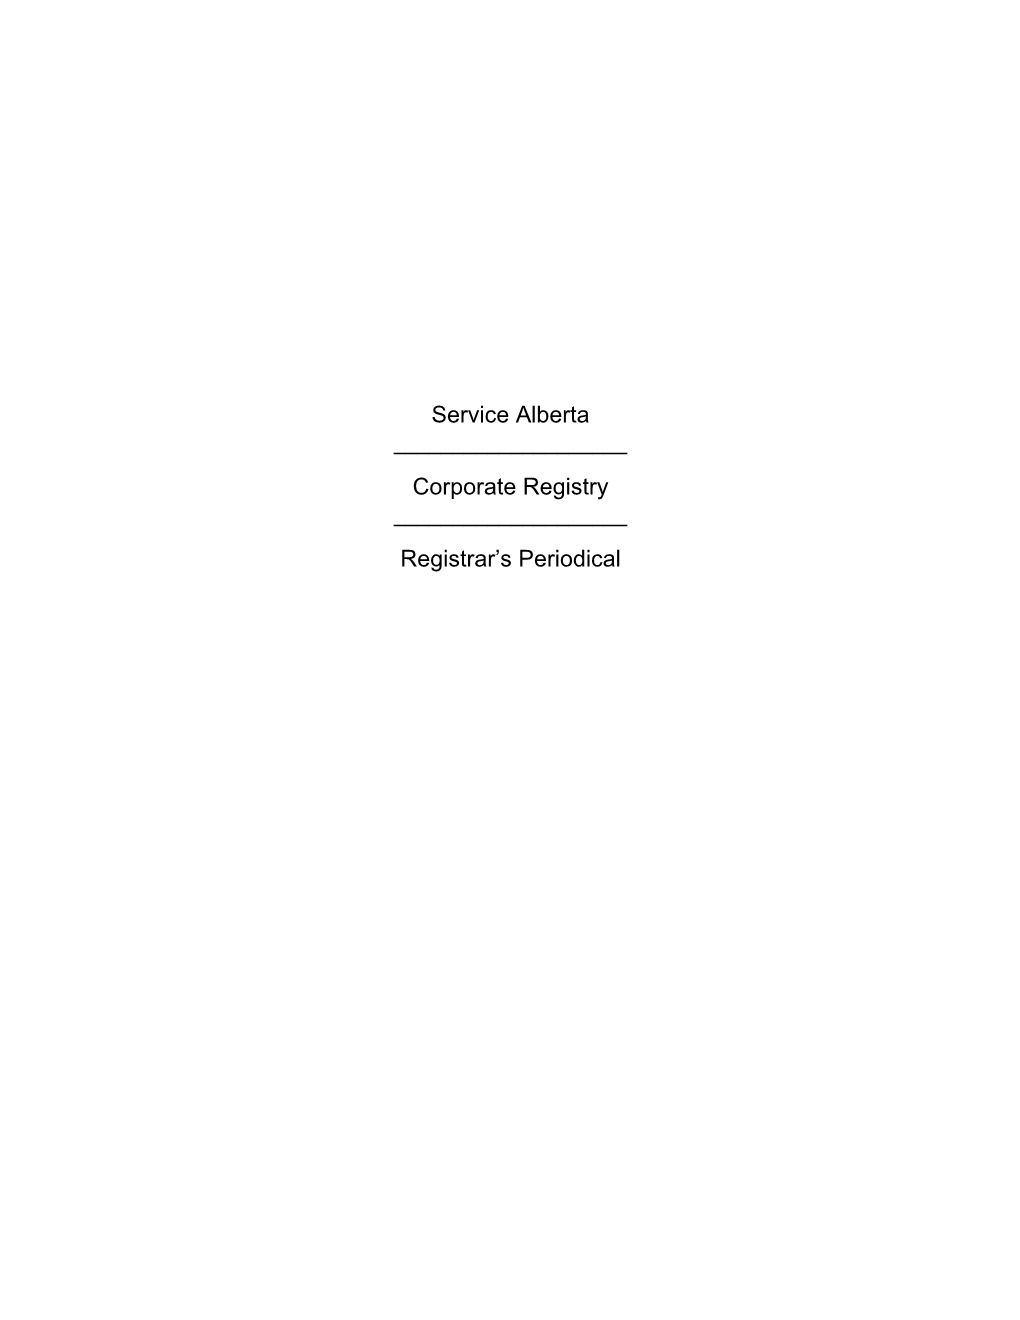 Service Alberta Corporate Registry Registrar's Periodical